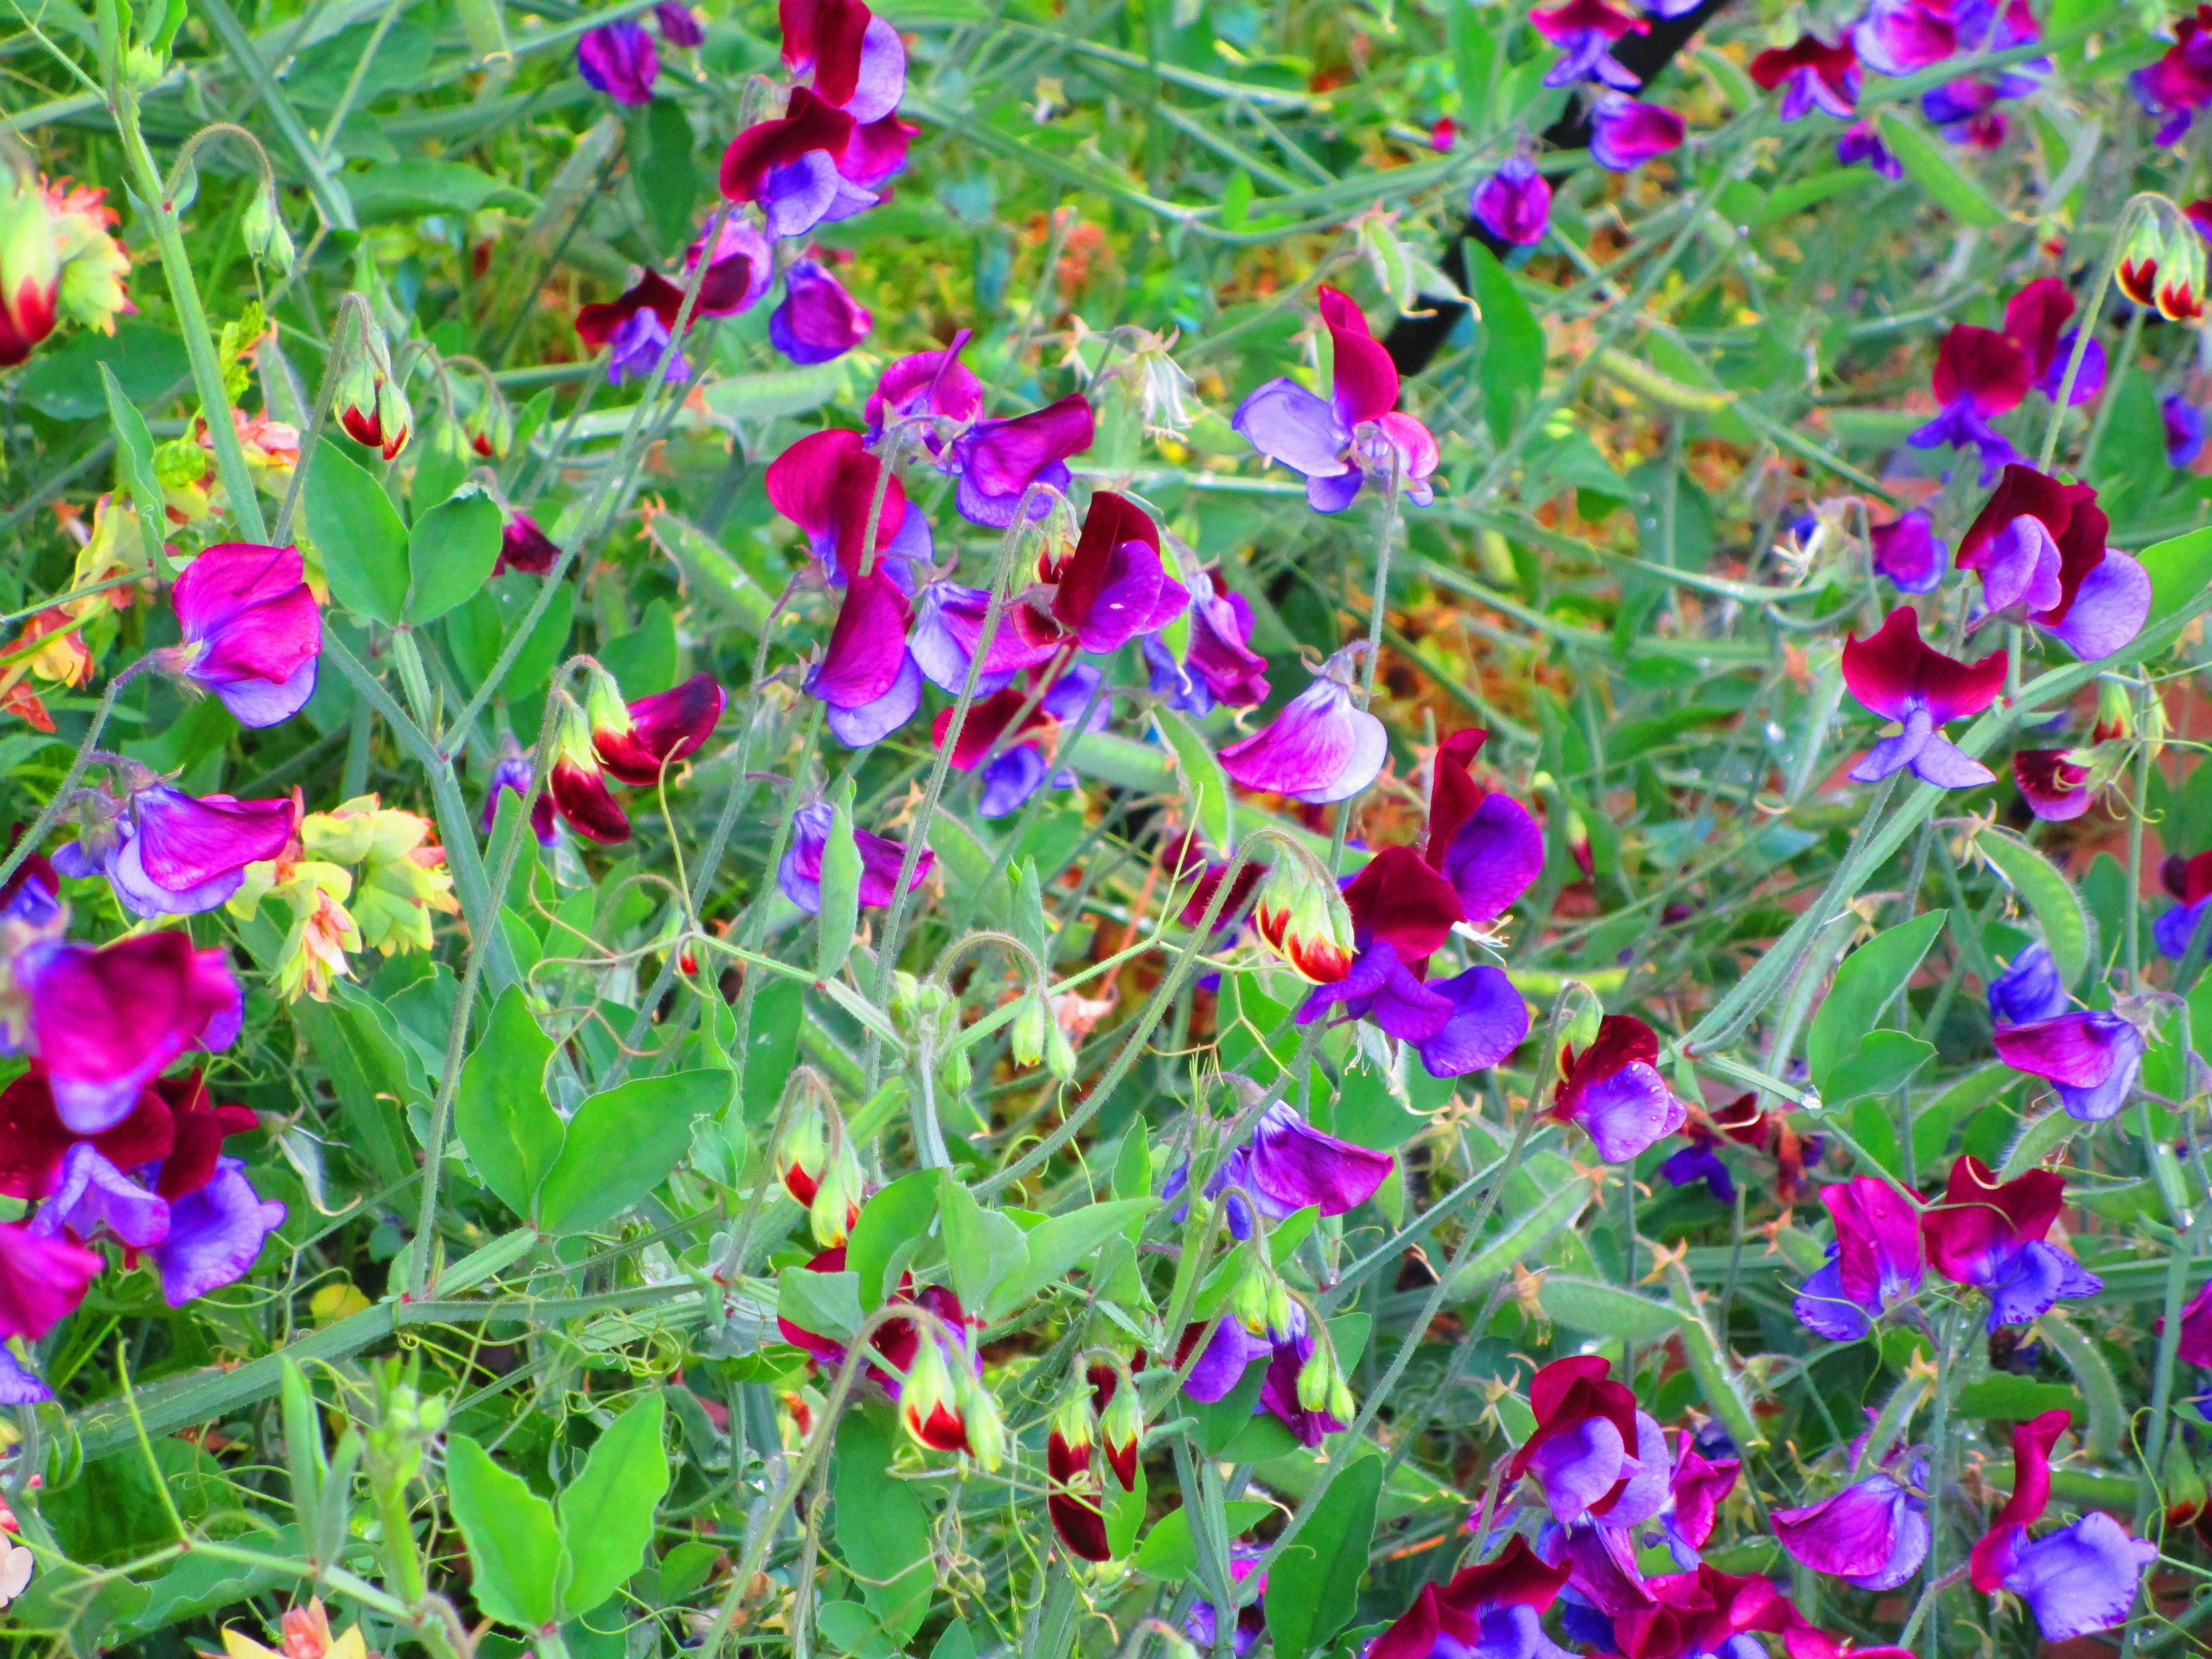 Free stock photo of Sweet peas flowers buds purple green garden 555555